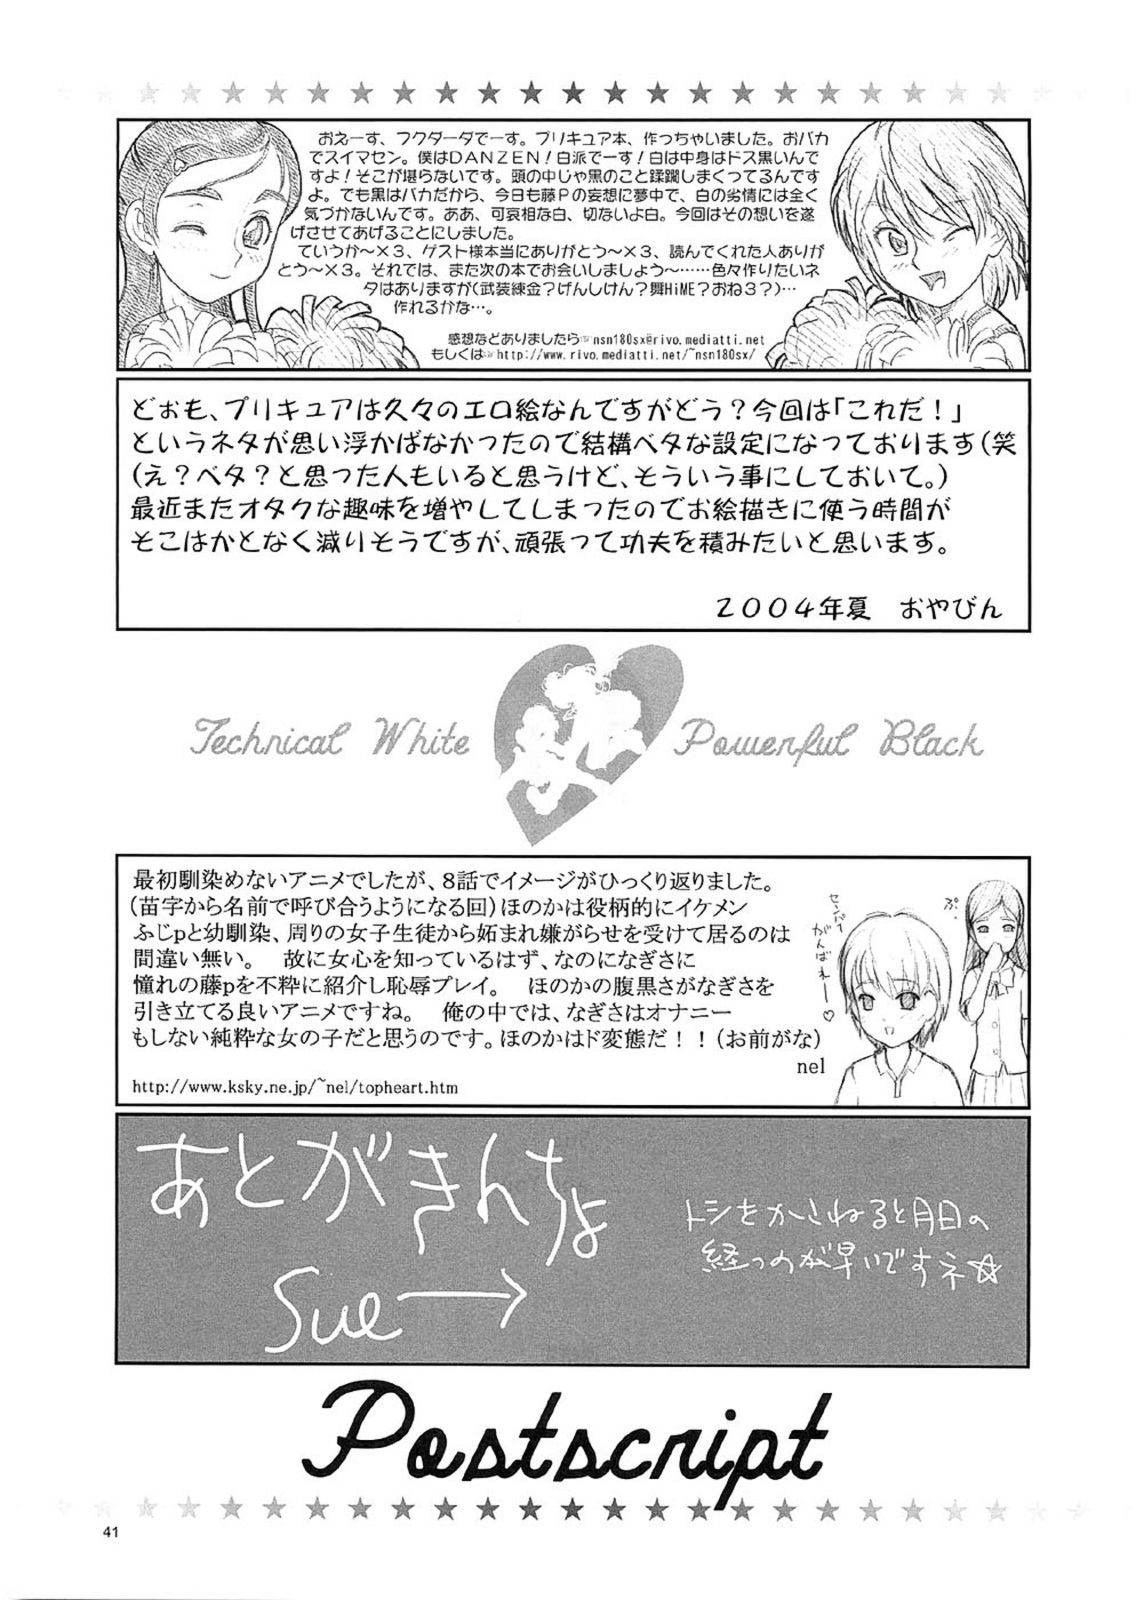 [Kensoh Ogawa] Technical White Powerful Black (Futari wa Precure) [ケンソウオガワ] 技のホワイト力のブラック (ふたりはプリキュア)